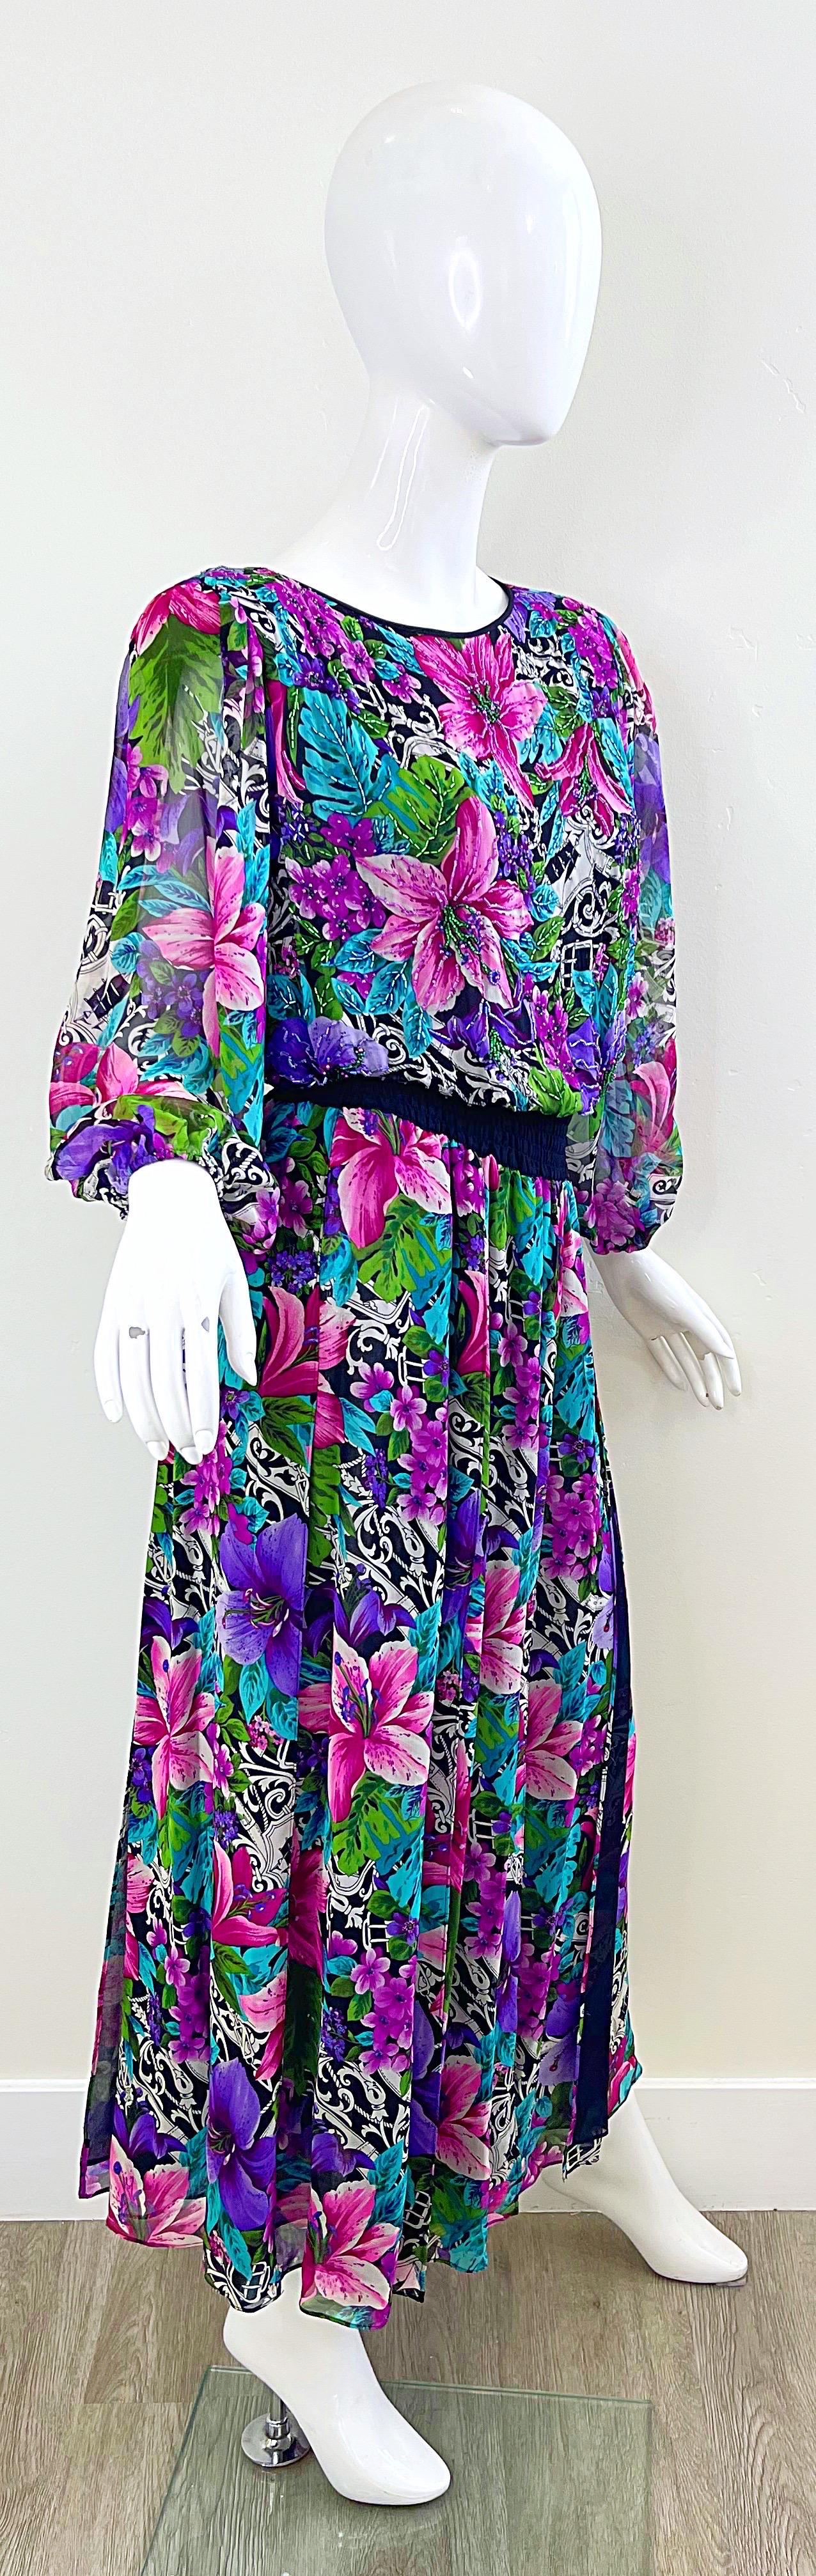 Diane Freis 1980s Silk Chiffon Beaded Tropical Print Vintage 80s Maxi Dress For Sale 4